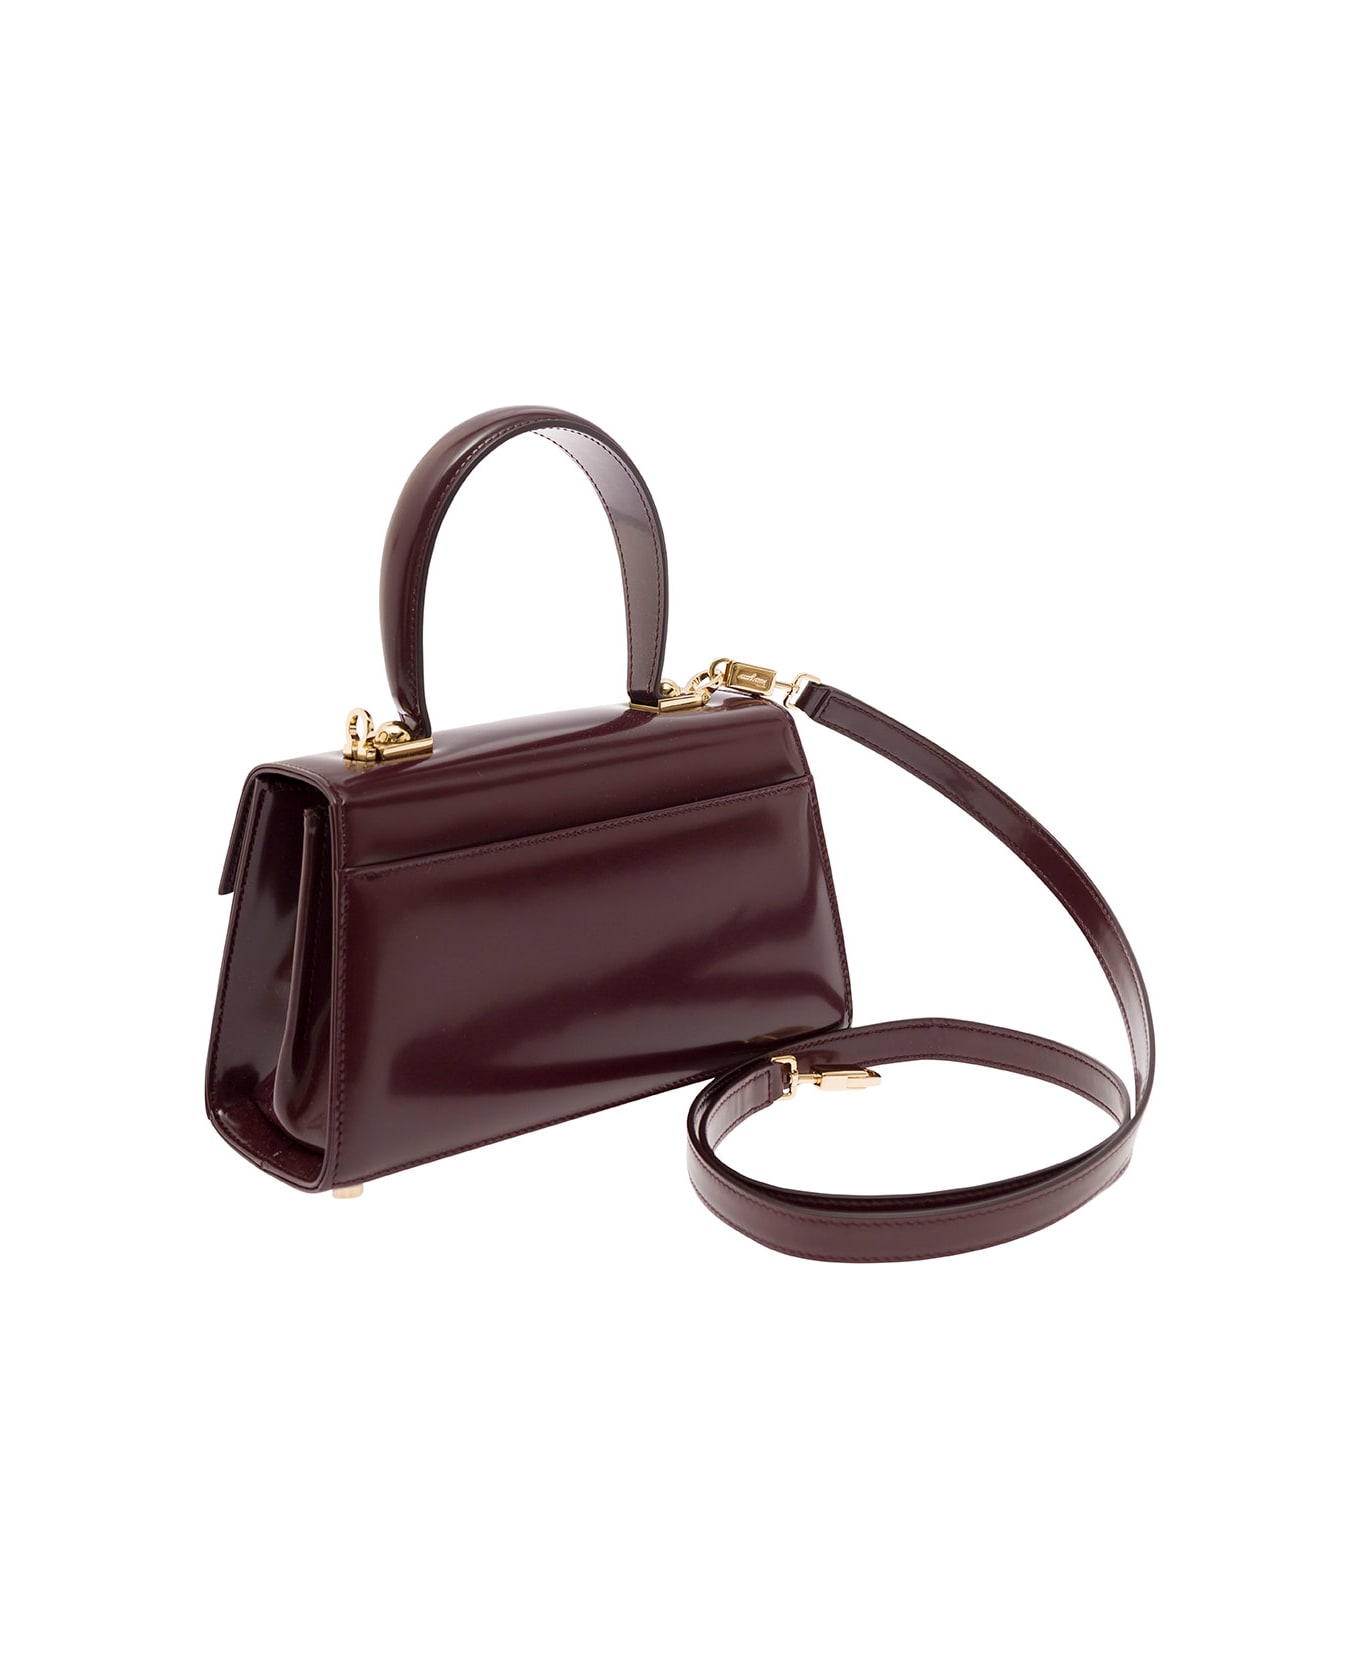 Ferragamo Bordeaux Handbag With Gancini Closure In Patent Leather Woman - Bordeaux トートバッグ